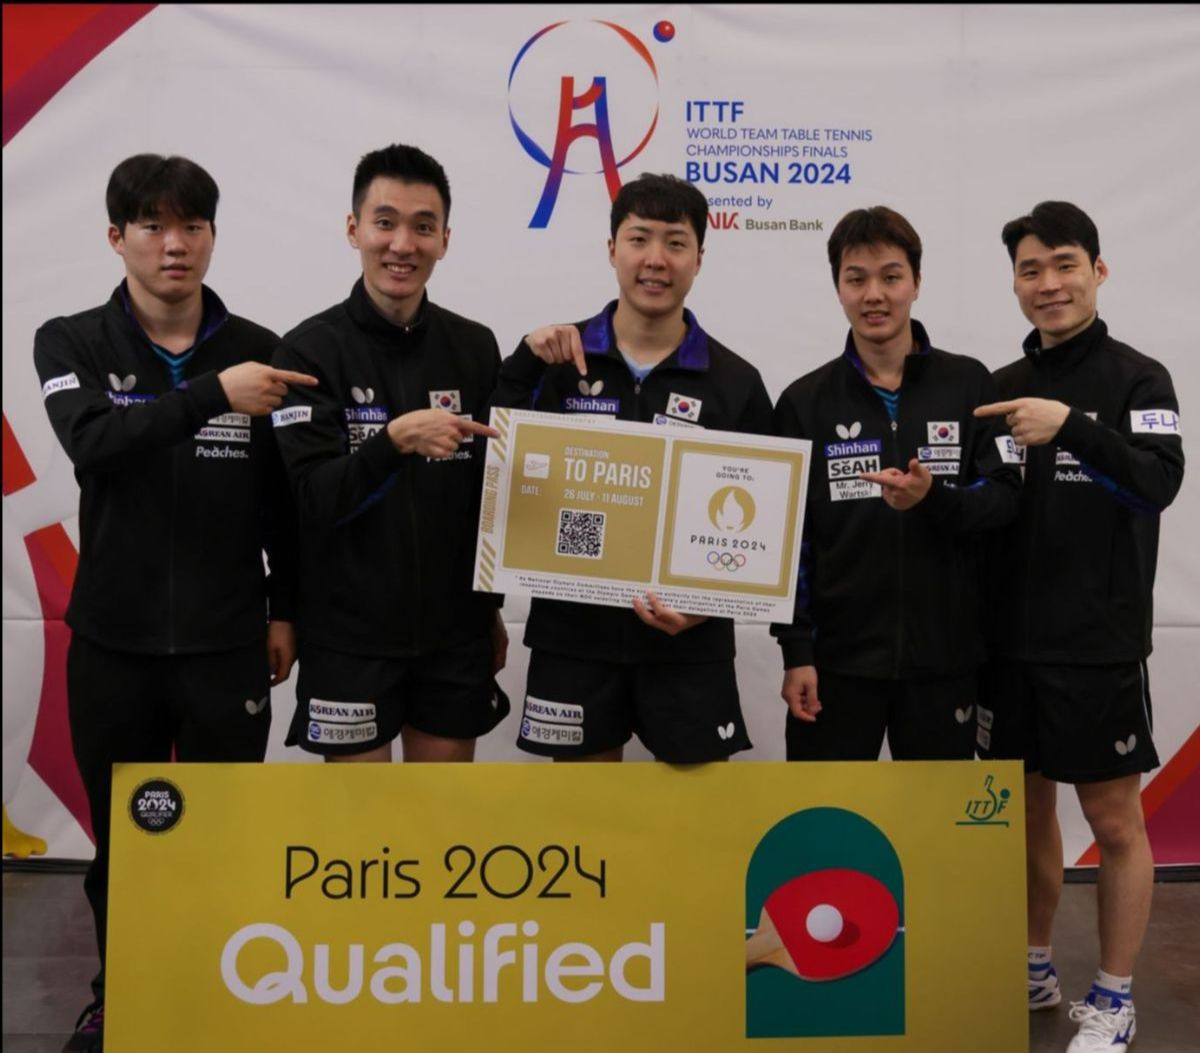 Paris 2024 qualifiers announced at Busan qualifying tournament